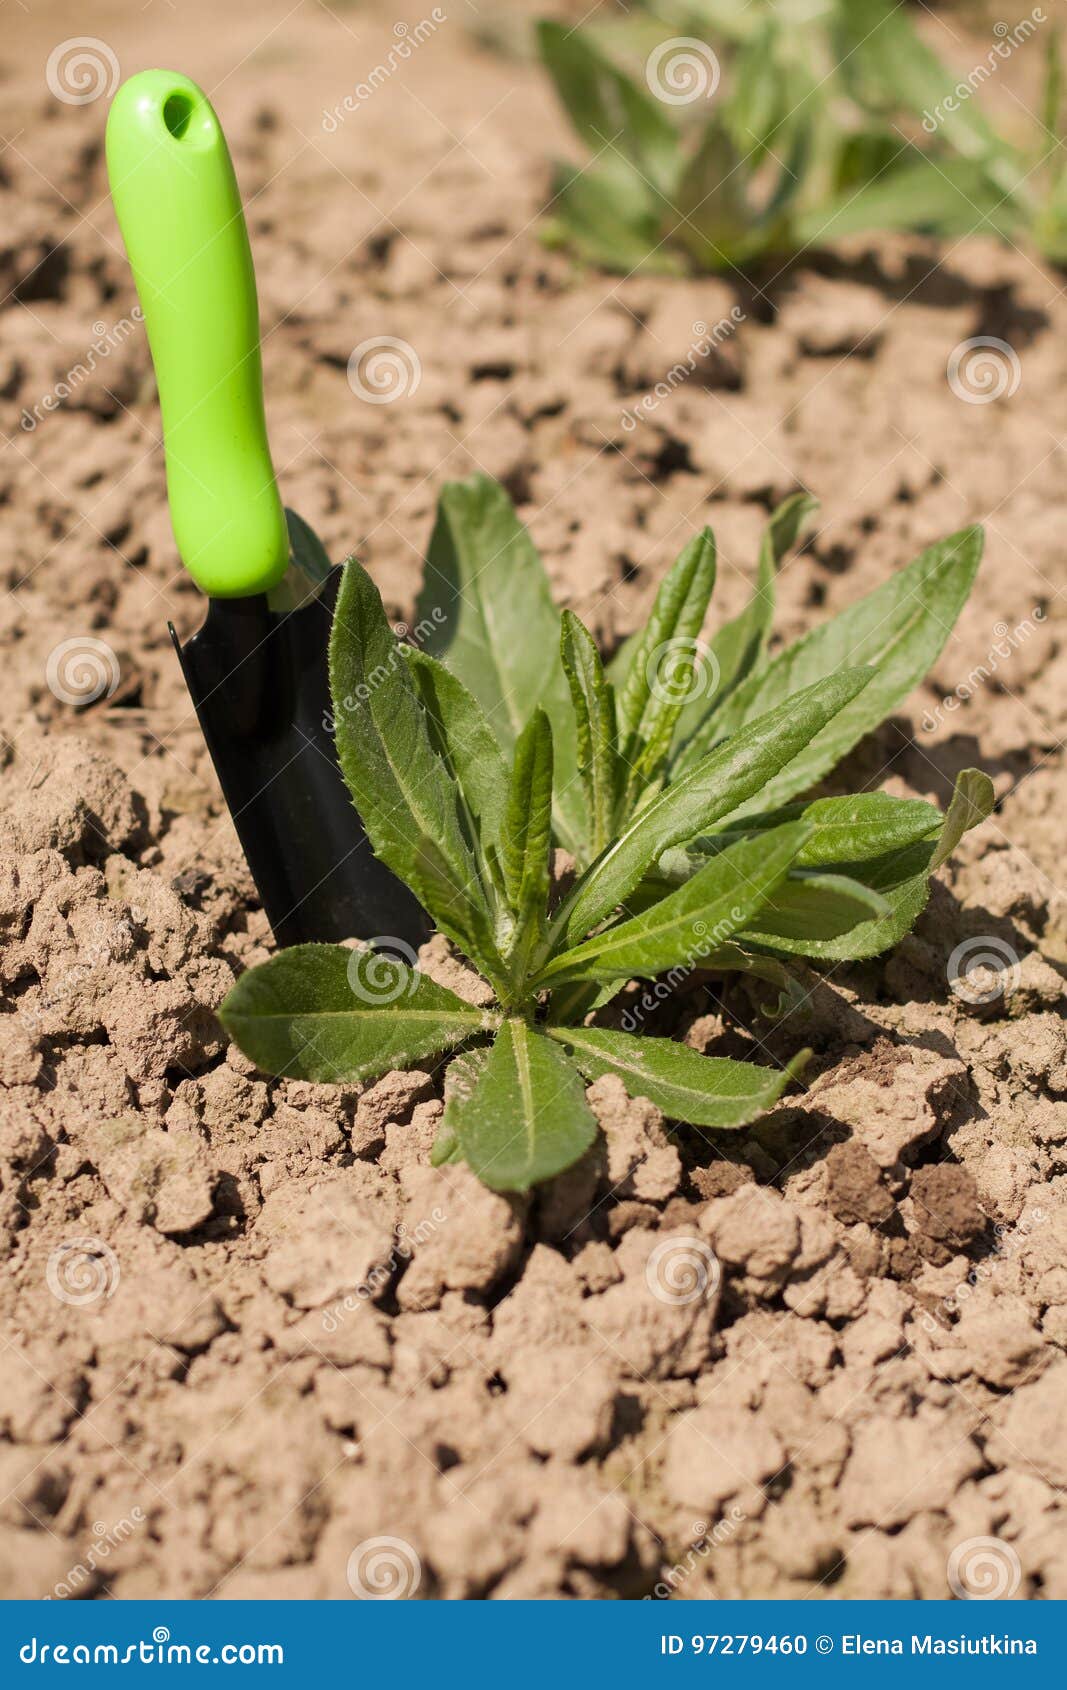 Gardening Trowel With Weed In Garden Stock Photo Image Of